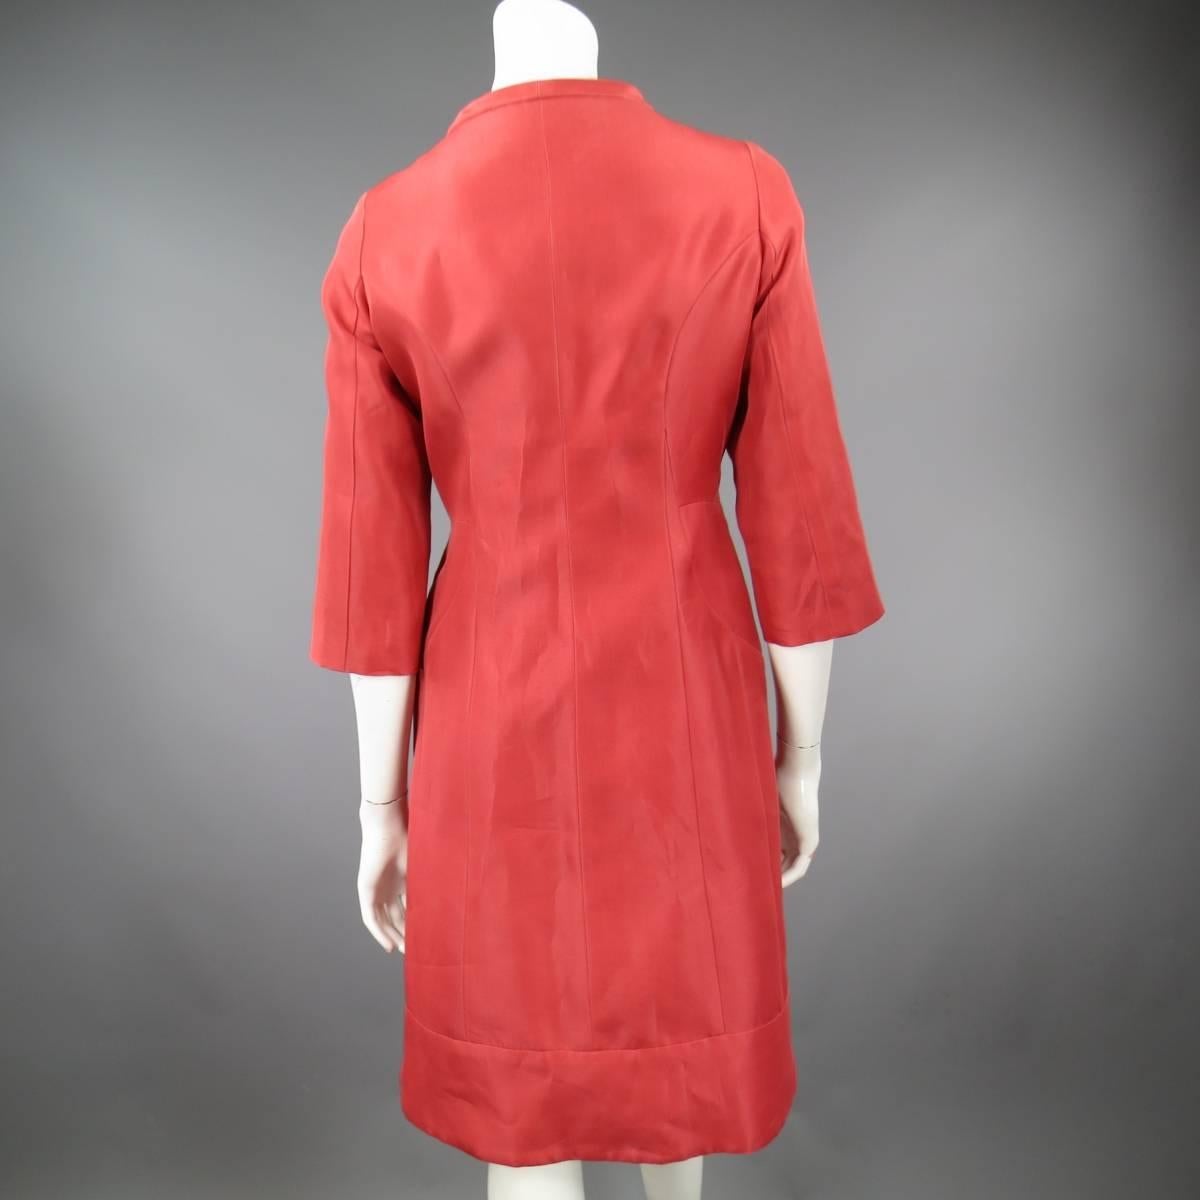 J. MENDEL Salmon Red Silk Evening Coat - Size 6 1